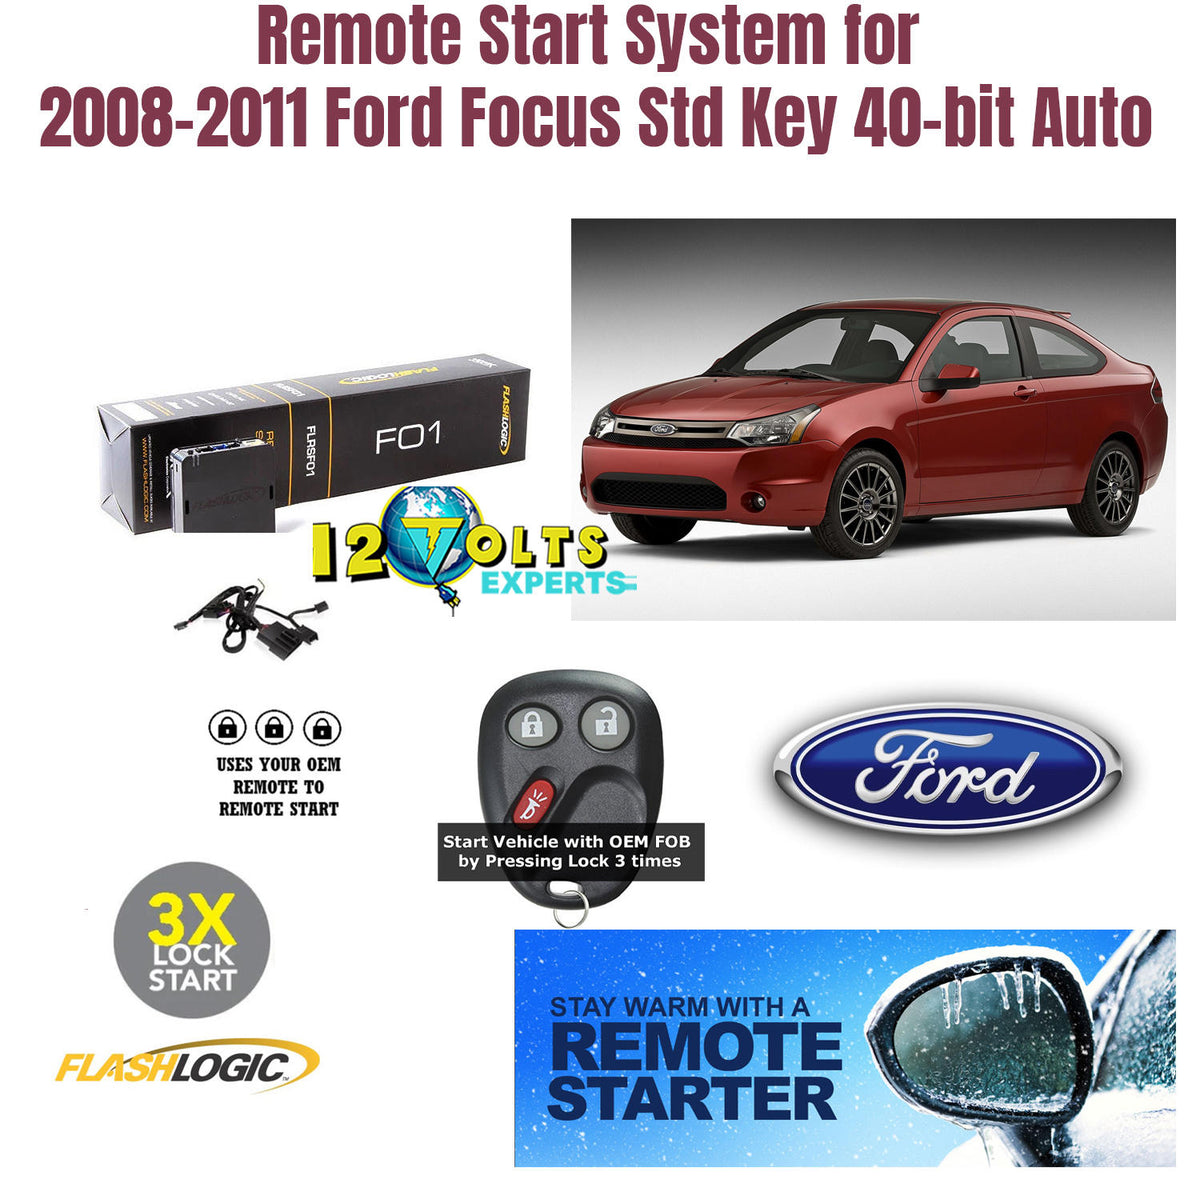 Remote Start System for 2008-2011 Ford Focus Std Key 40-bit Auto